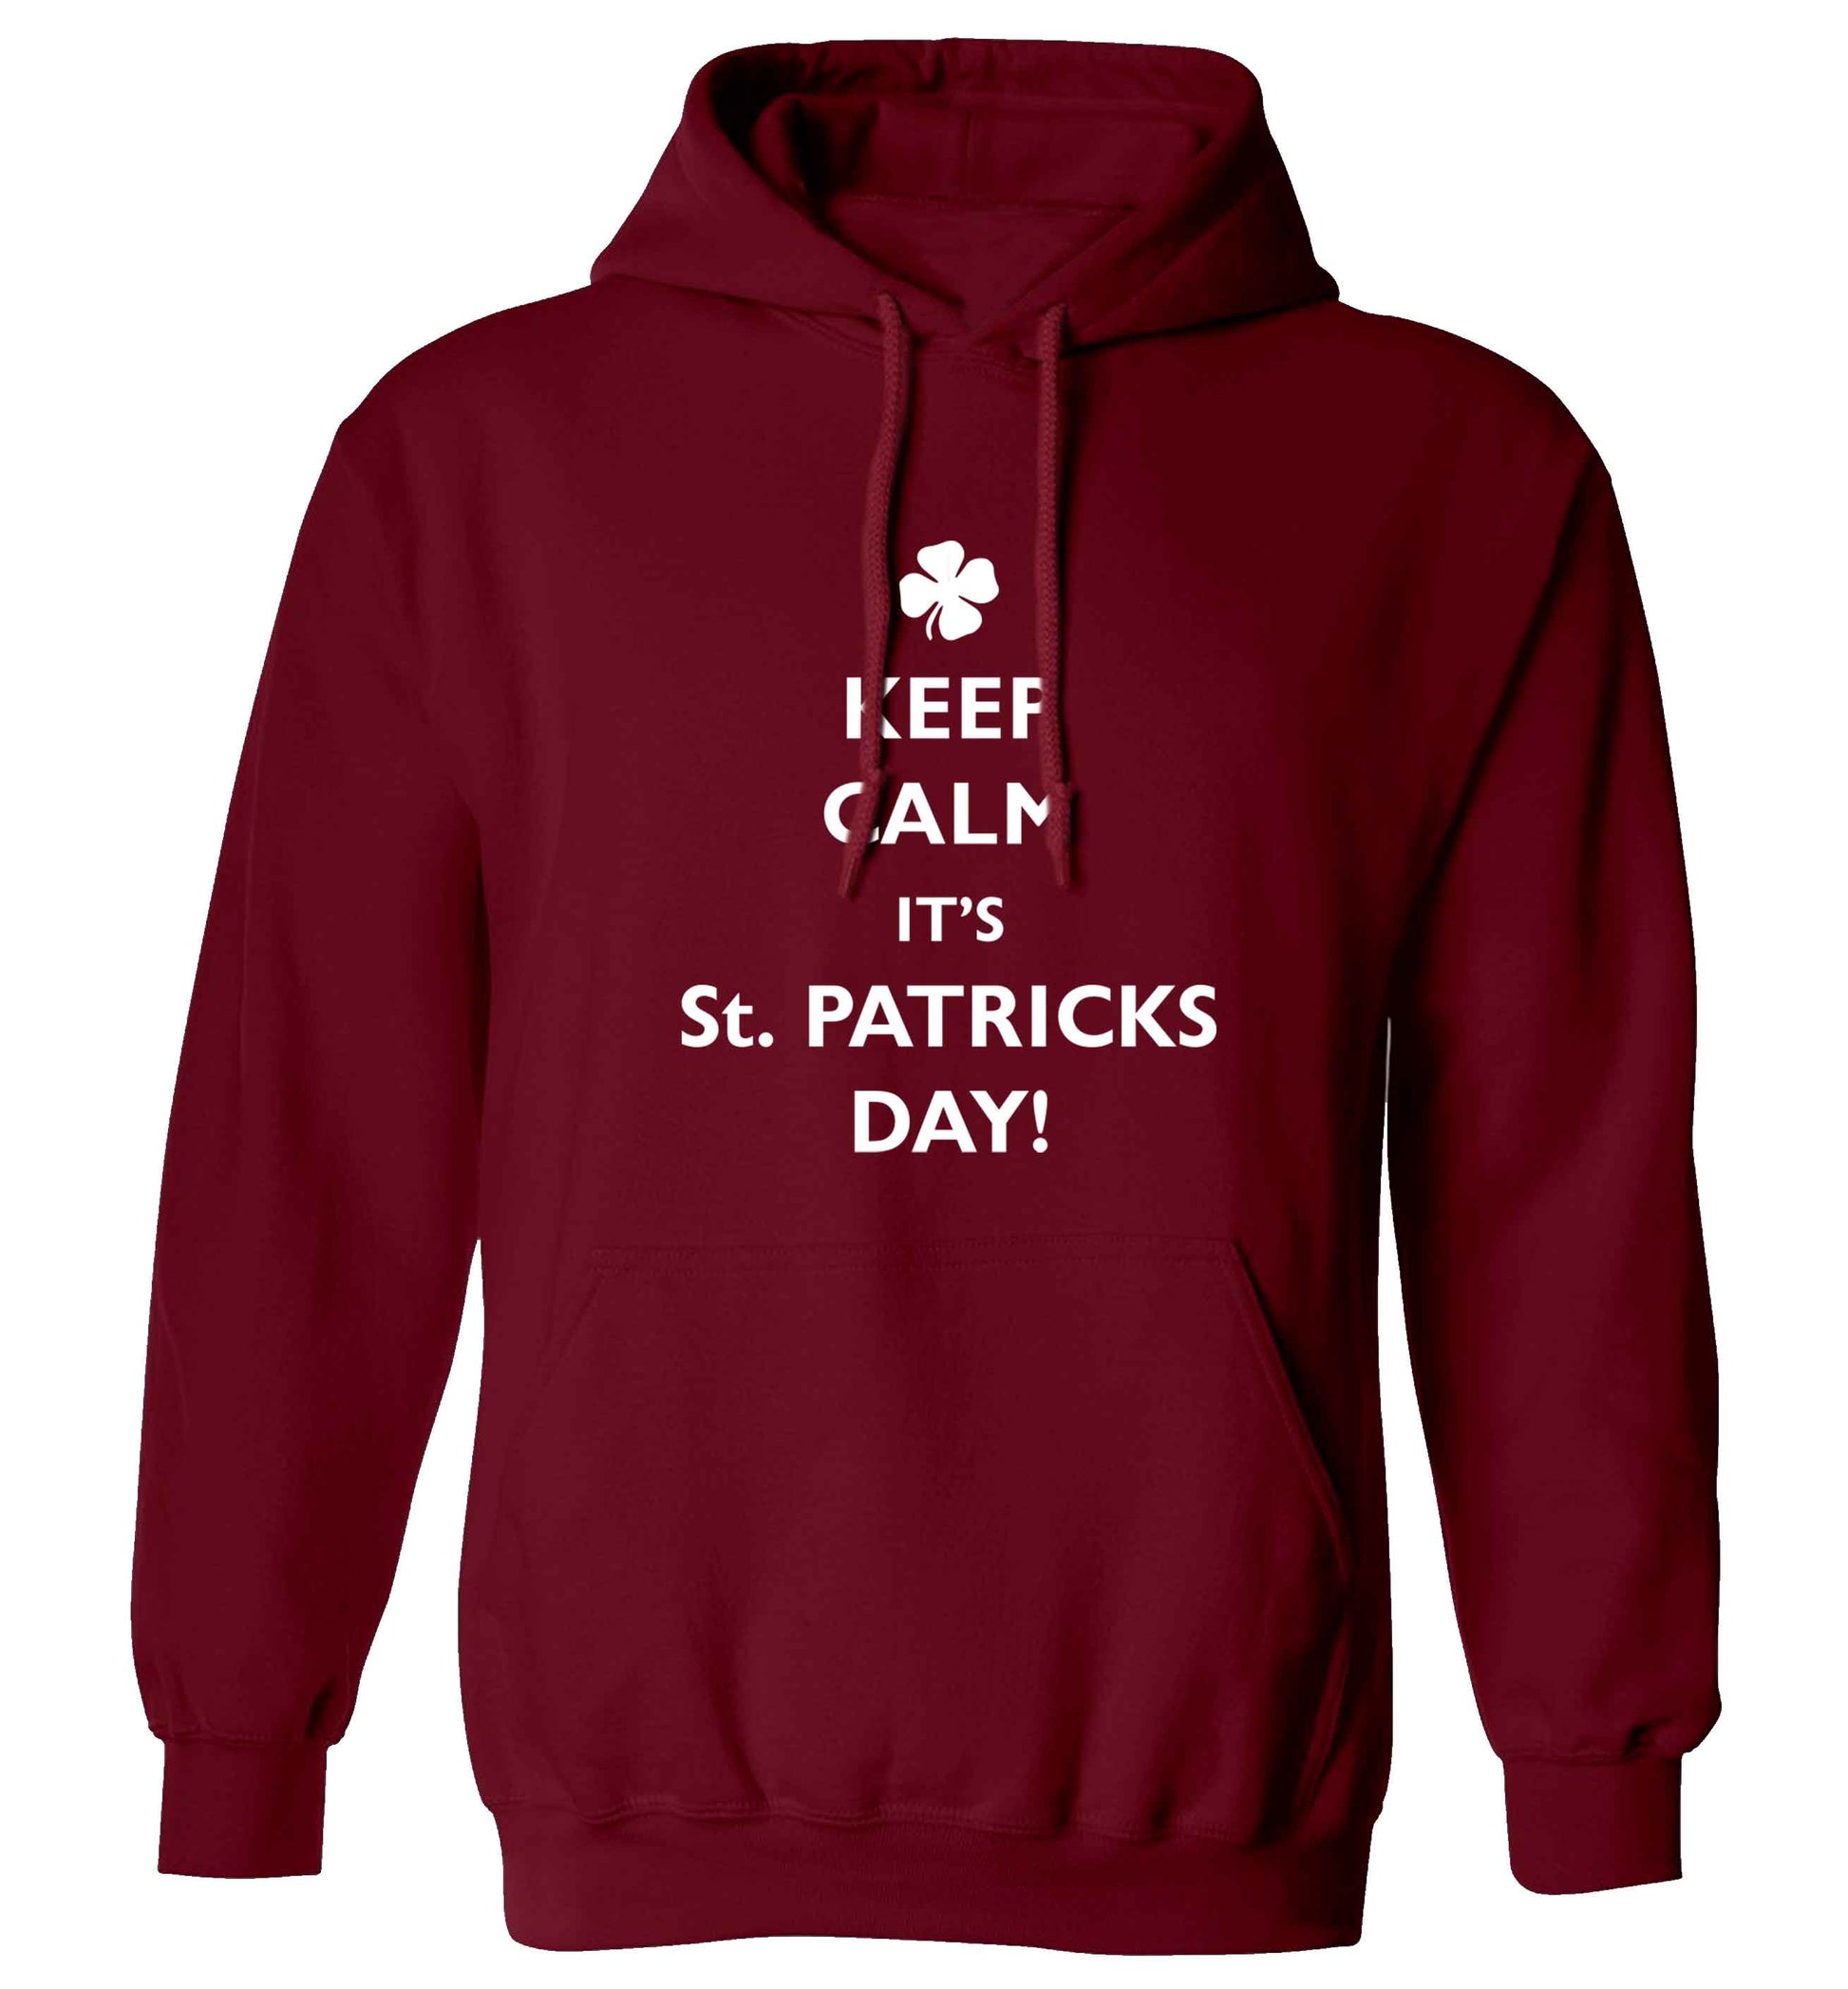 Keep calm it's St.Patricks day adults unisex maroon hoodie 2XL